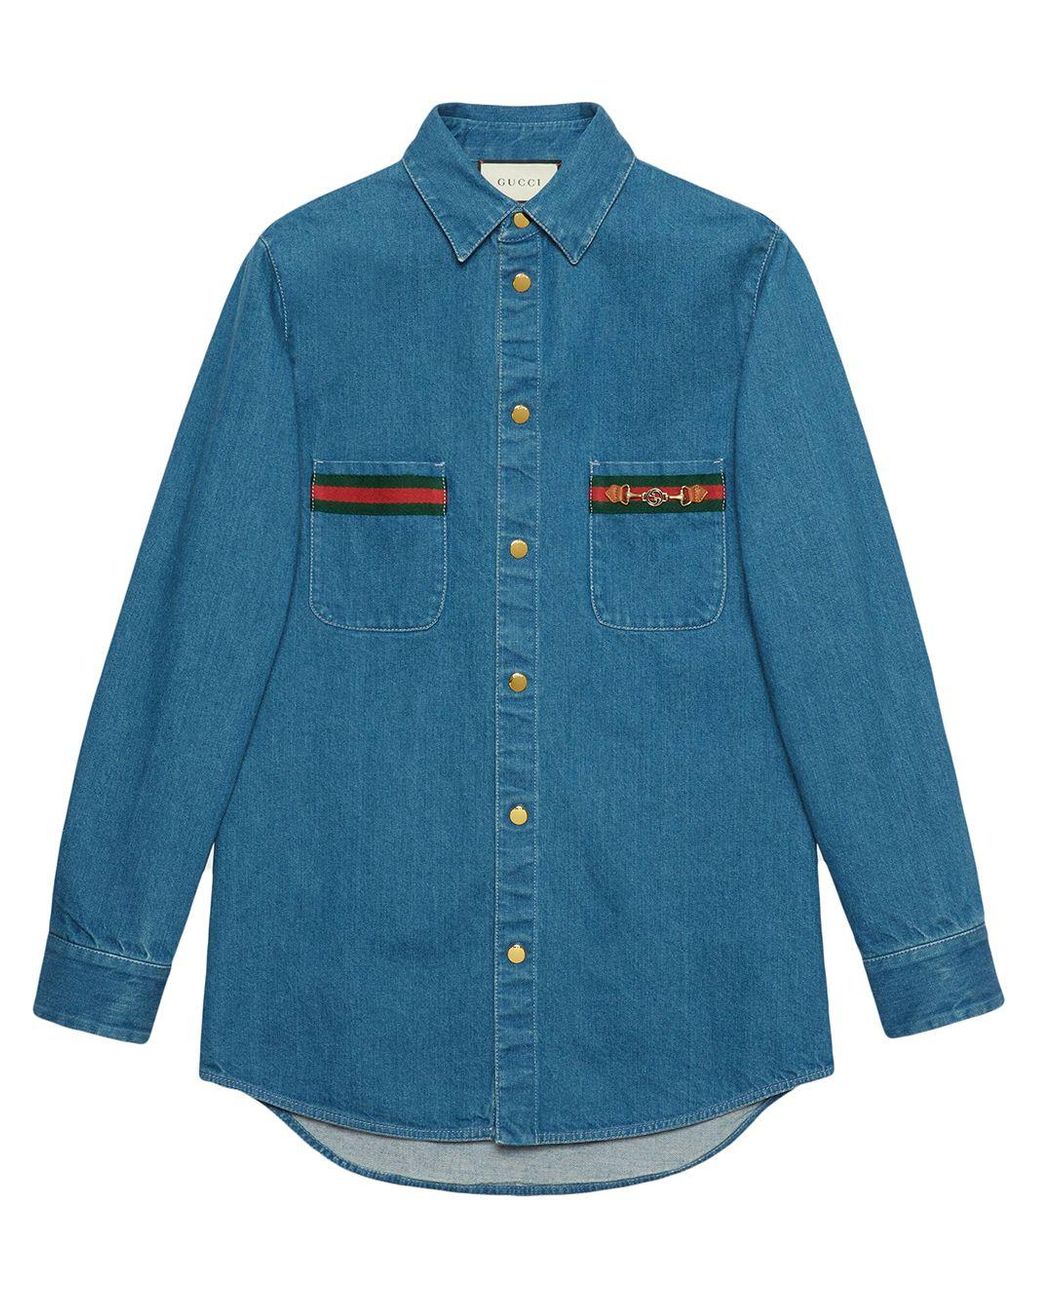 Gucci Web-detail Long-sleeve Denim Shirt in Blue for Men - Lyst